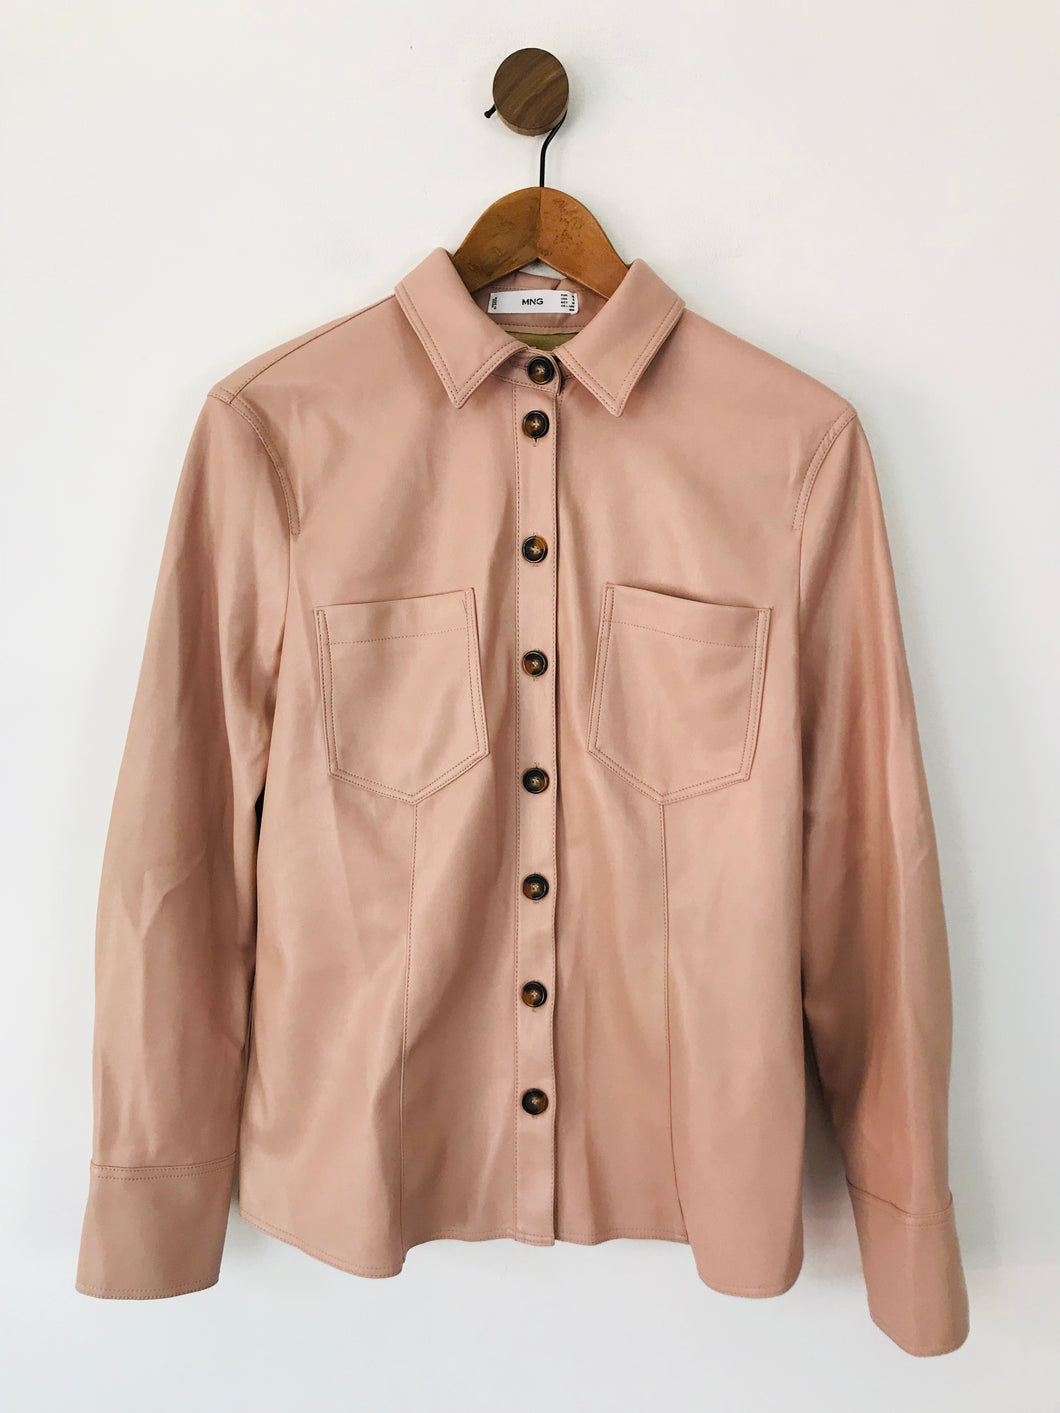 Mango Women's Faux Leather Long Sleeve Button-Up Shirt | M UK10-12 | Pink